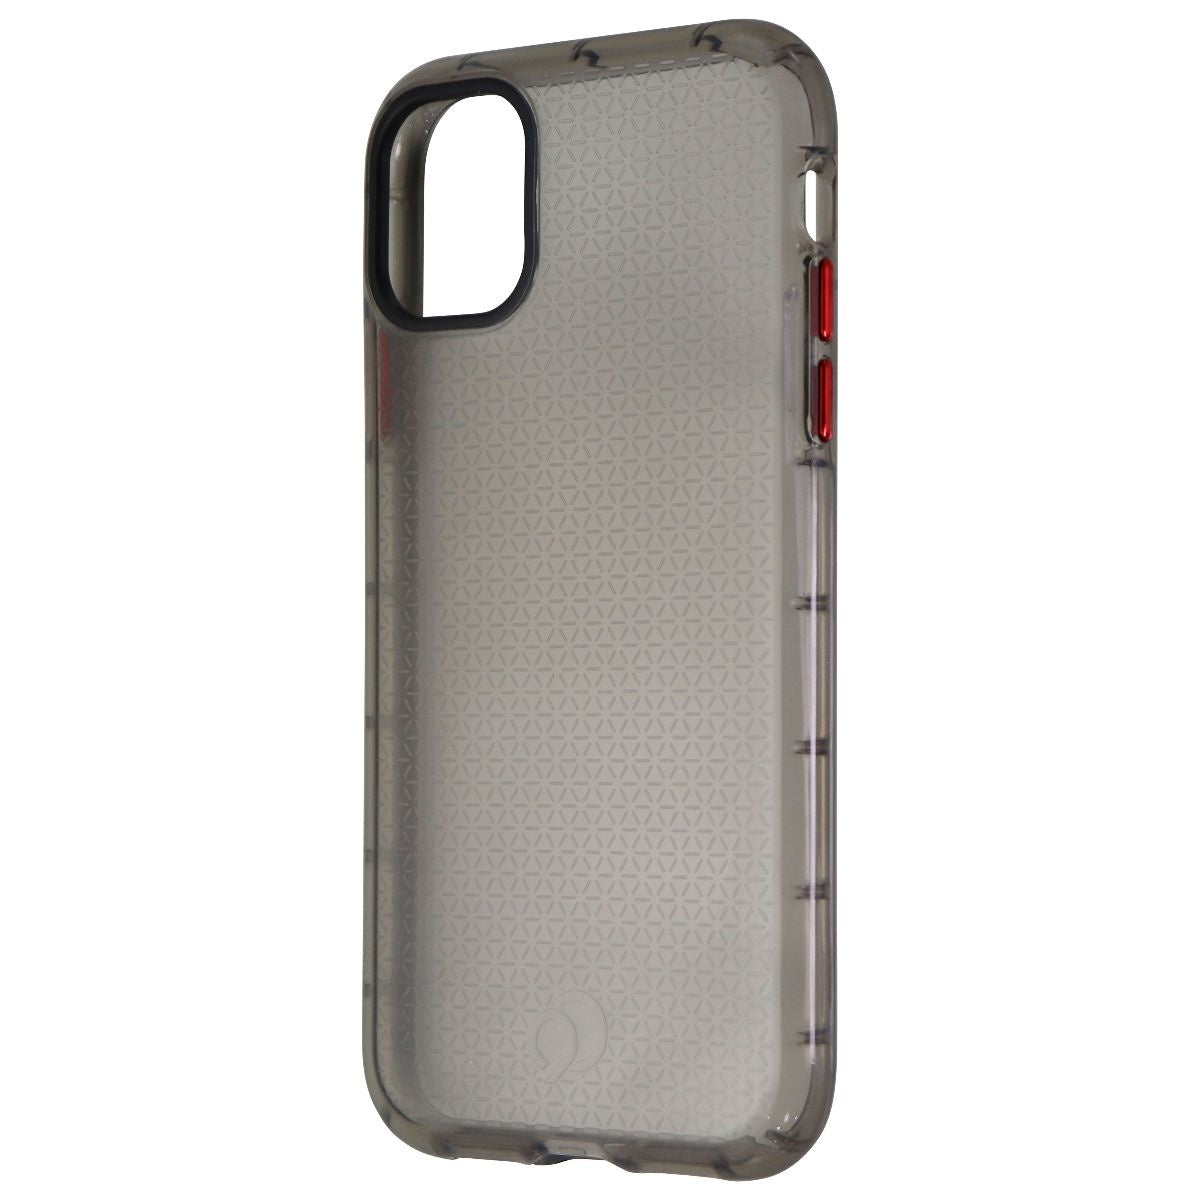 Nimbus9 Phantom 2 Series Gel Flexible Case for Apple iPhone 11 - Smoke (Gray) Cell Phone - Cases, Covers & Skins Nimbus9    - Simple Cell Bulk Wholesale Pricing - USA Seller